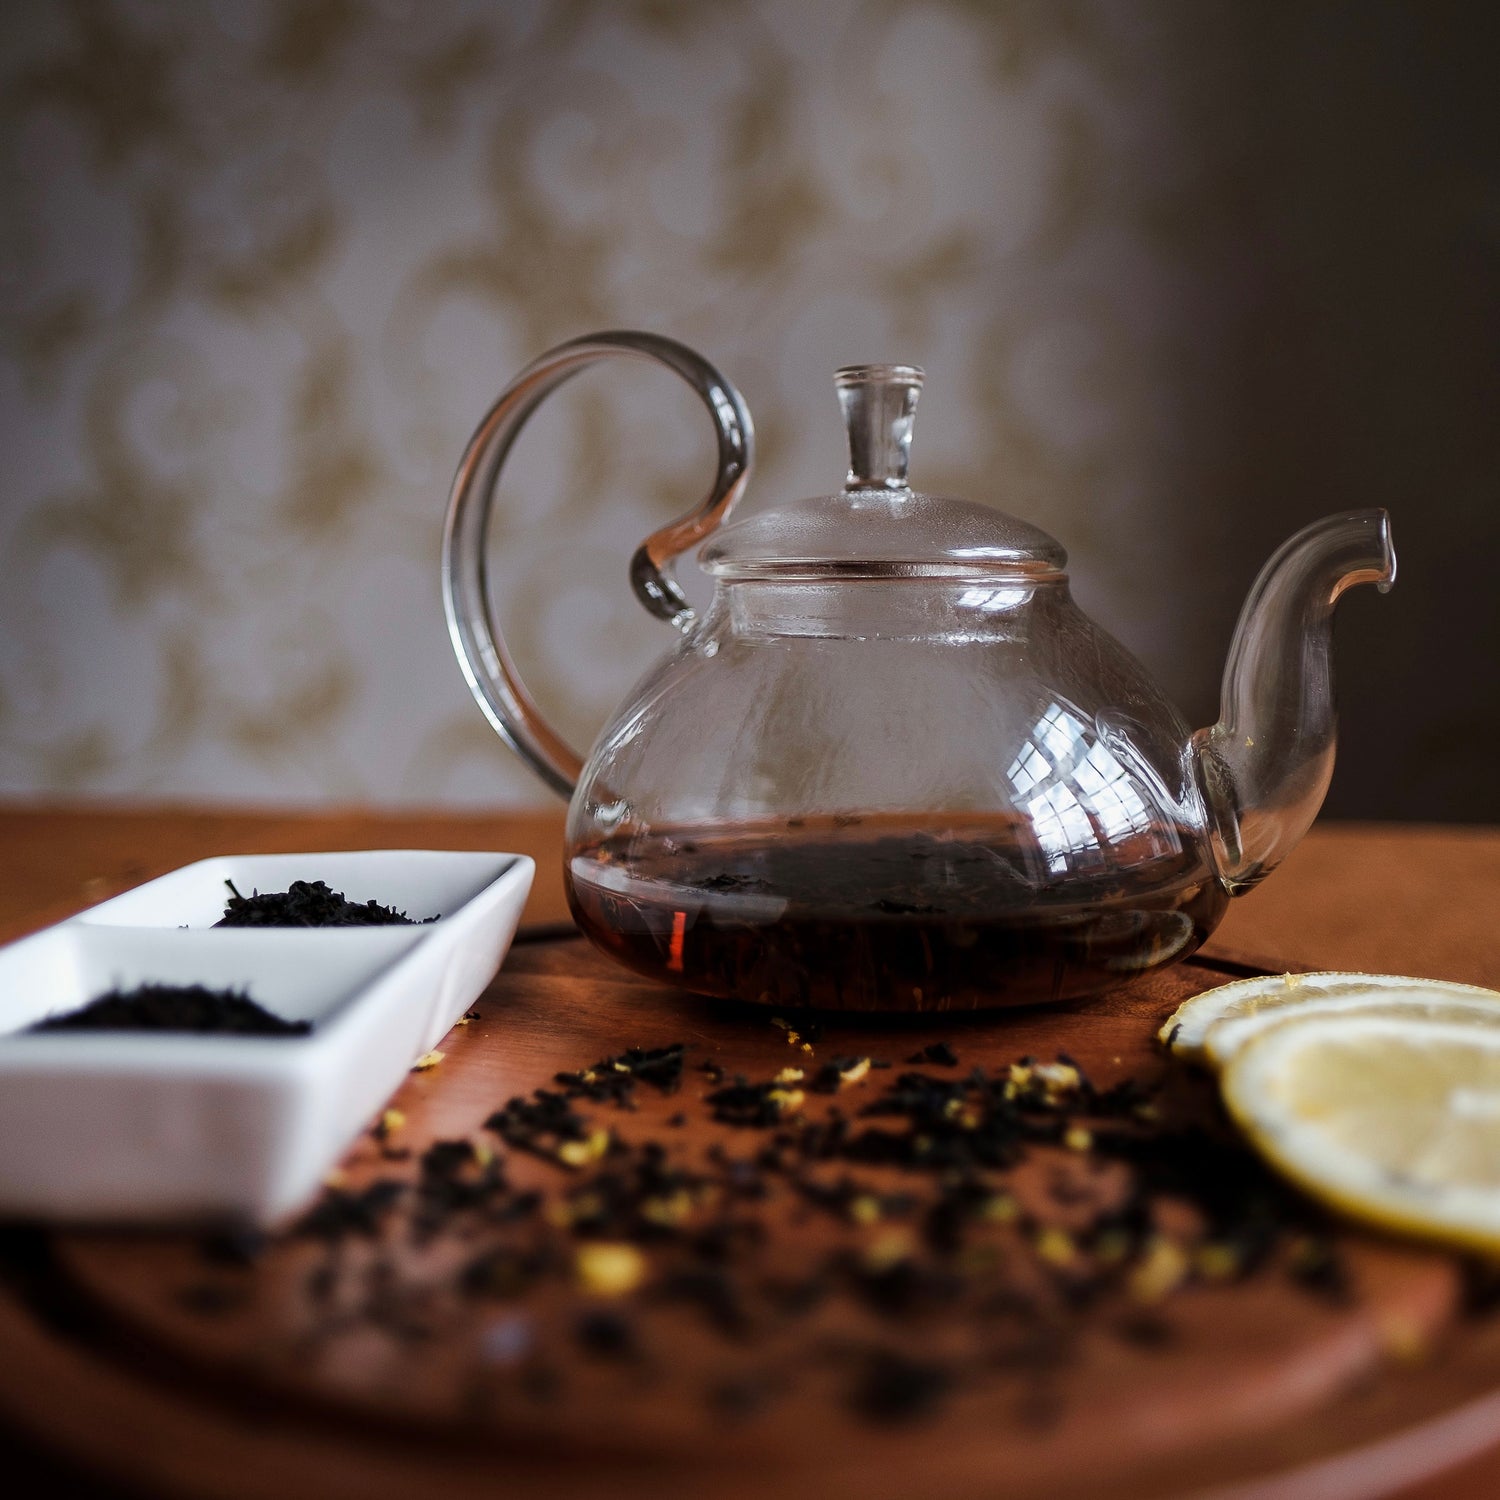 Teapots & Tea Sets